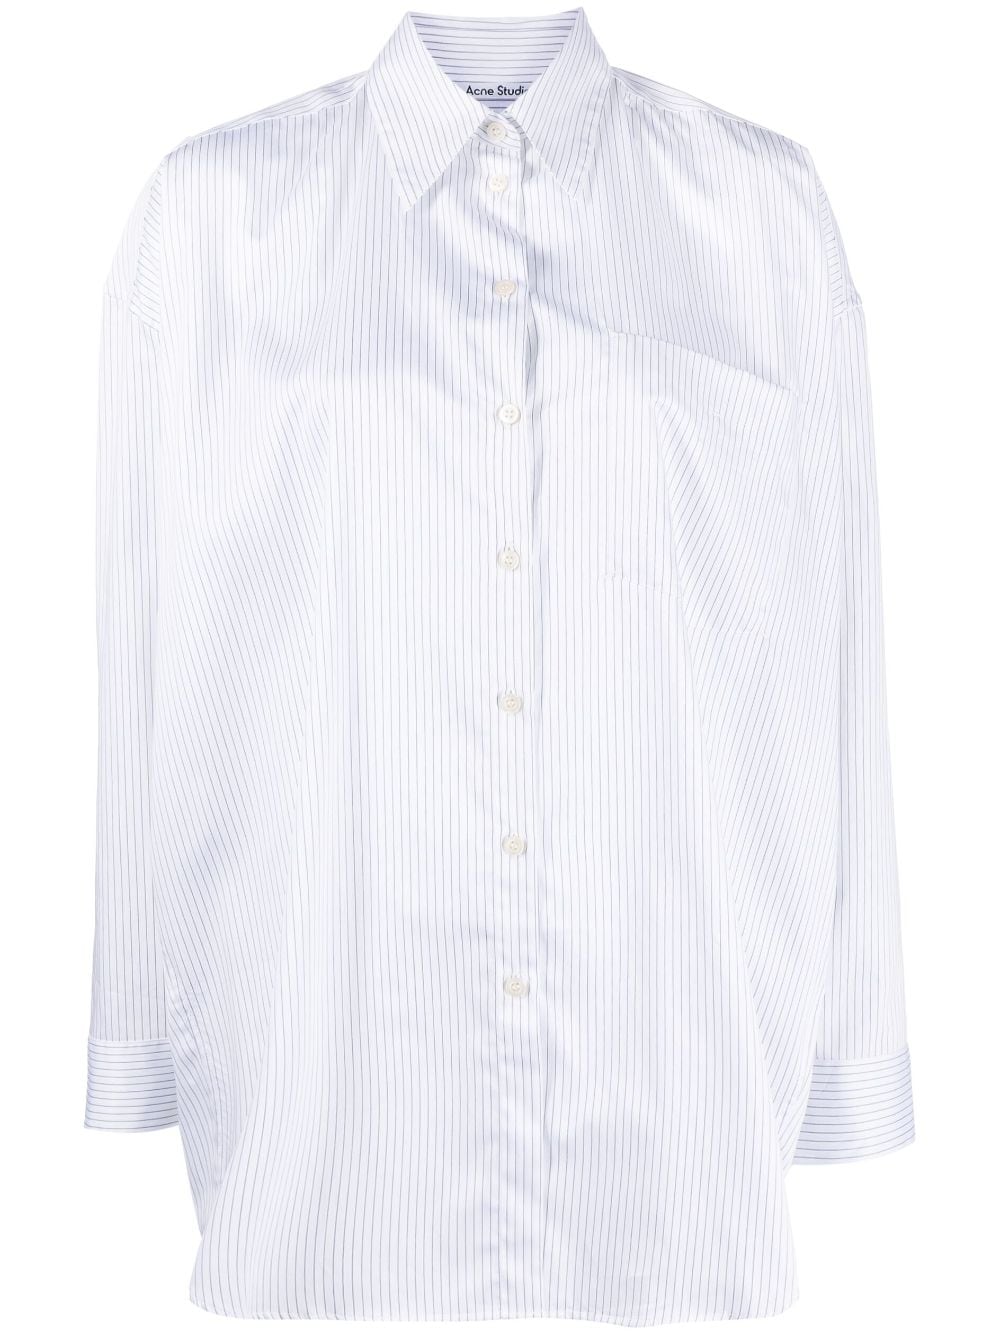 Acne Studios striped pocket shirt - White von Acne Studios